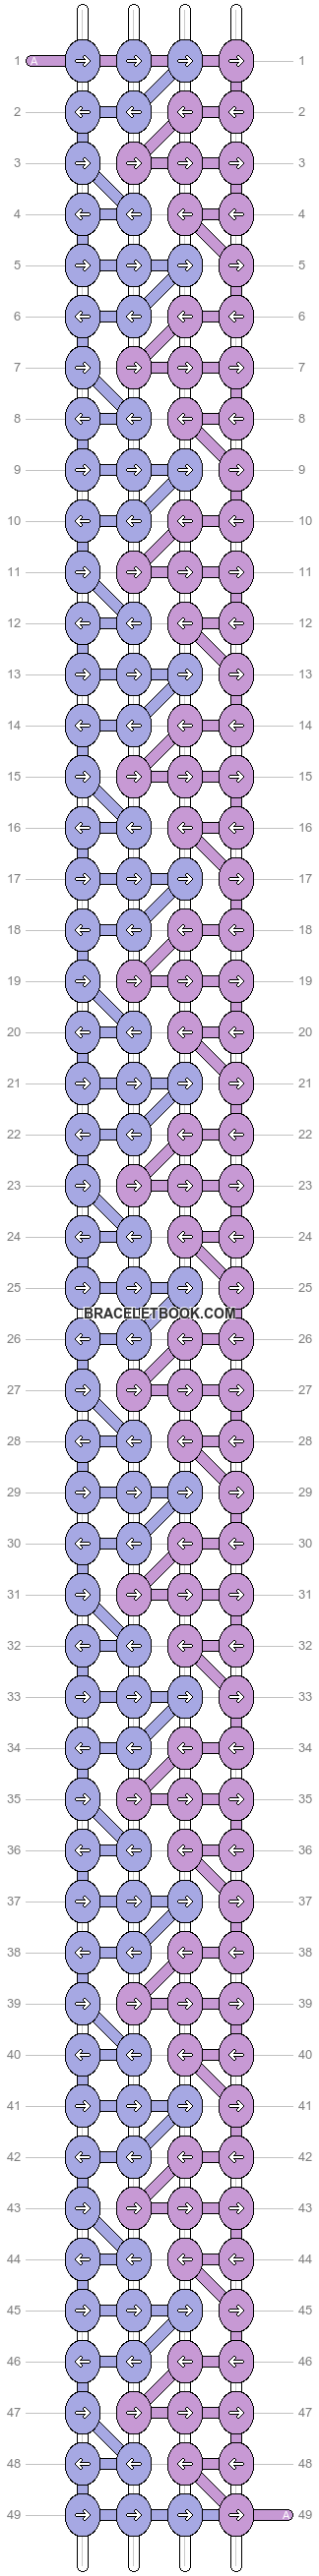 Alpha pattern #16840 variation #226721 pattern